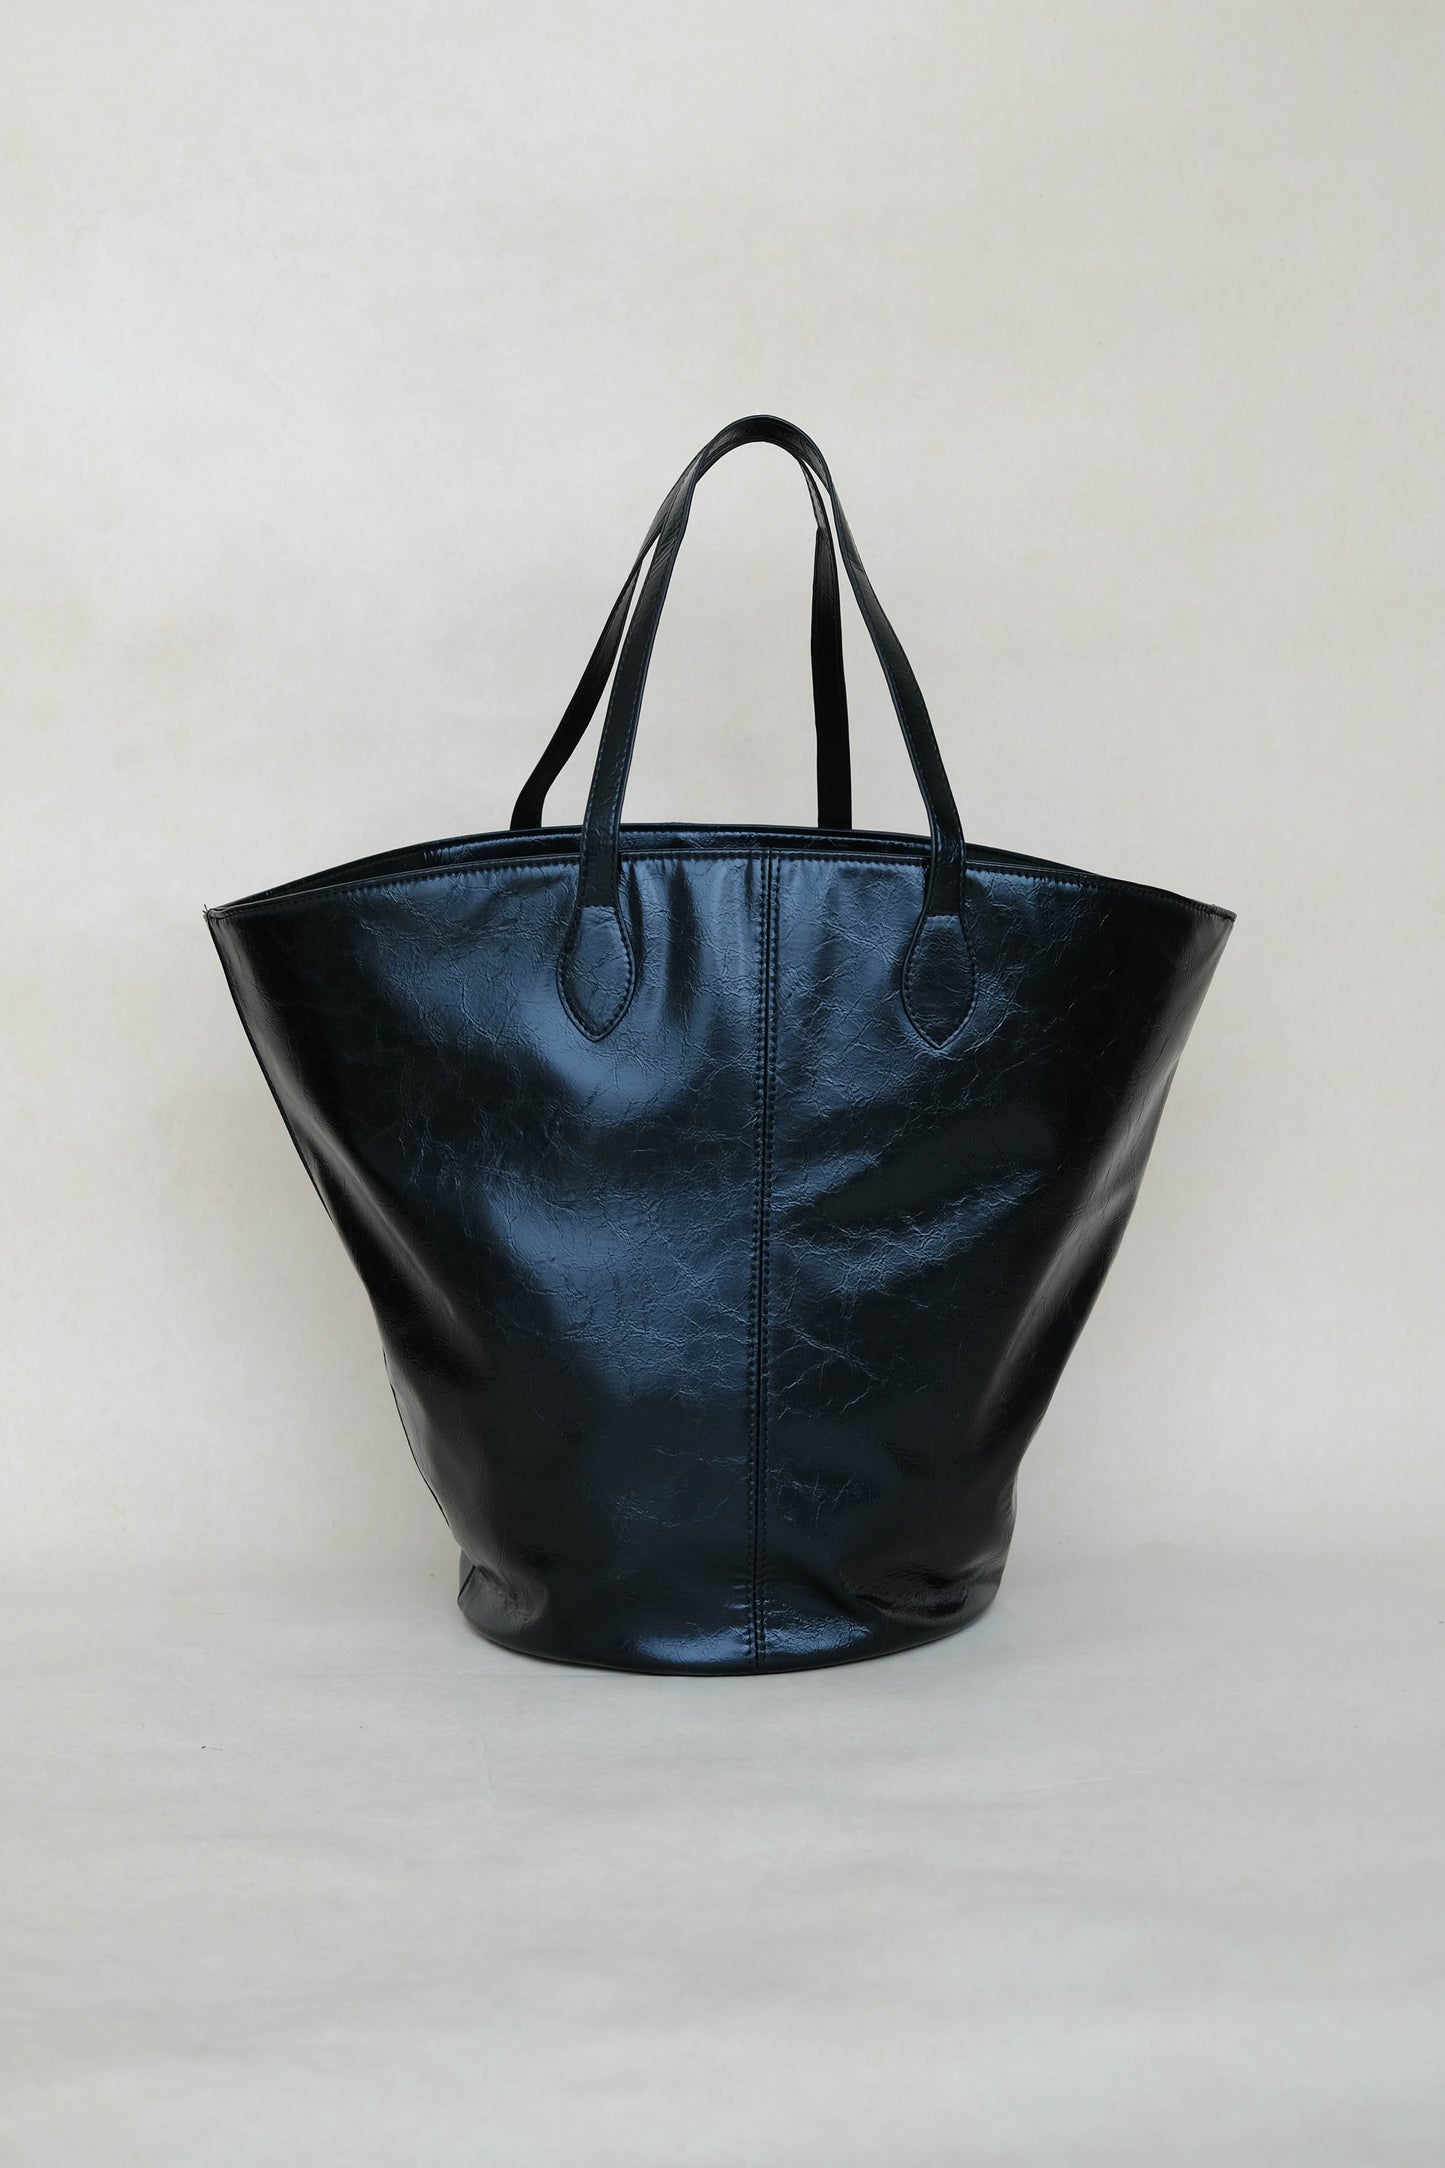 Bucket large capacity shoulder bag in classic black